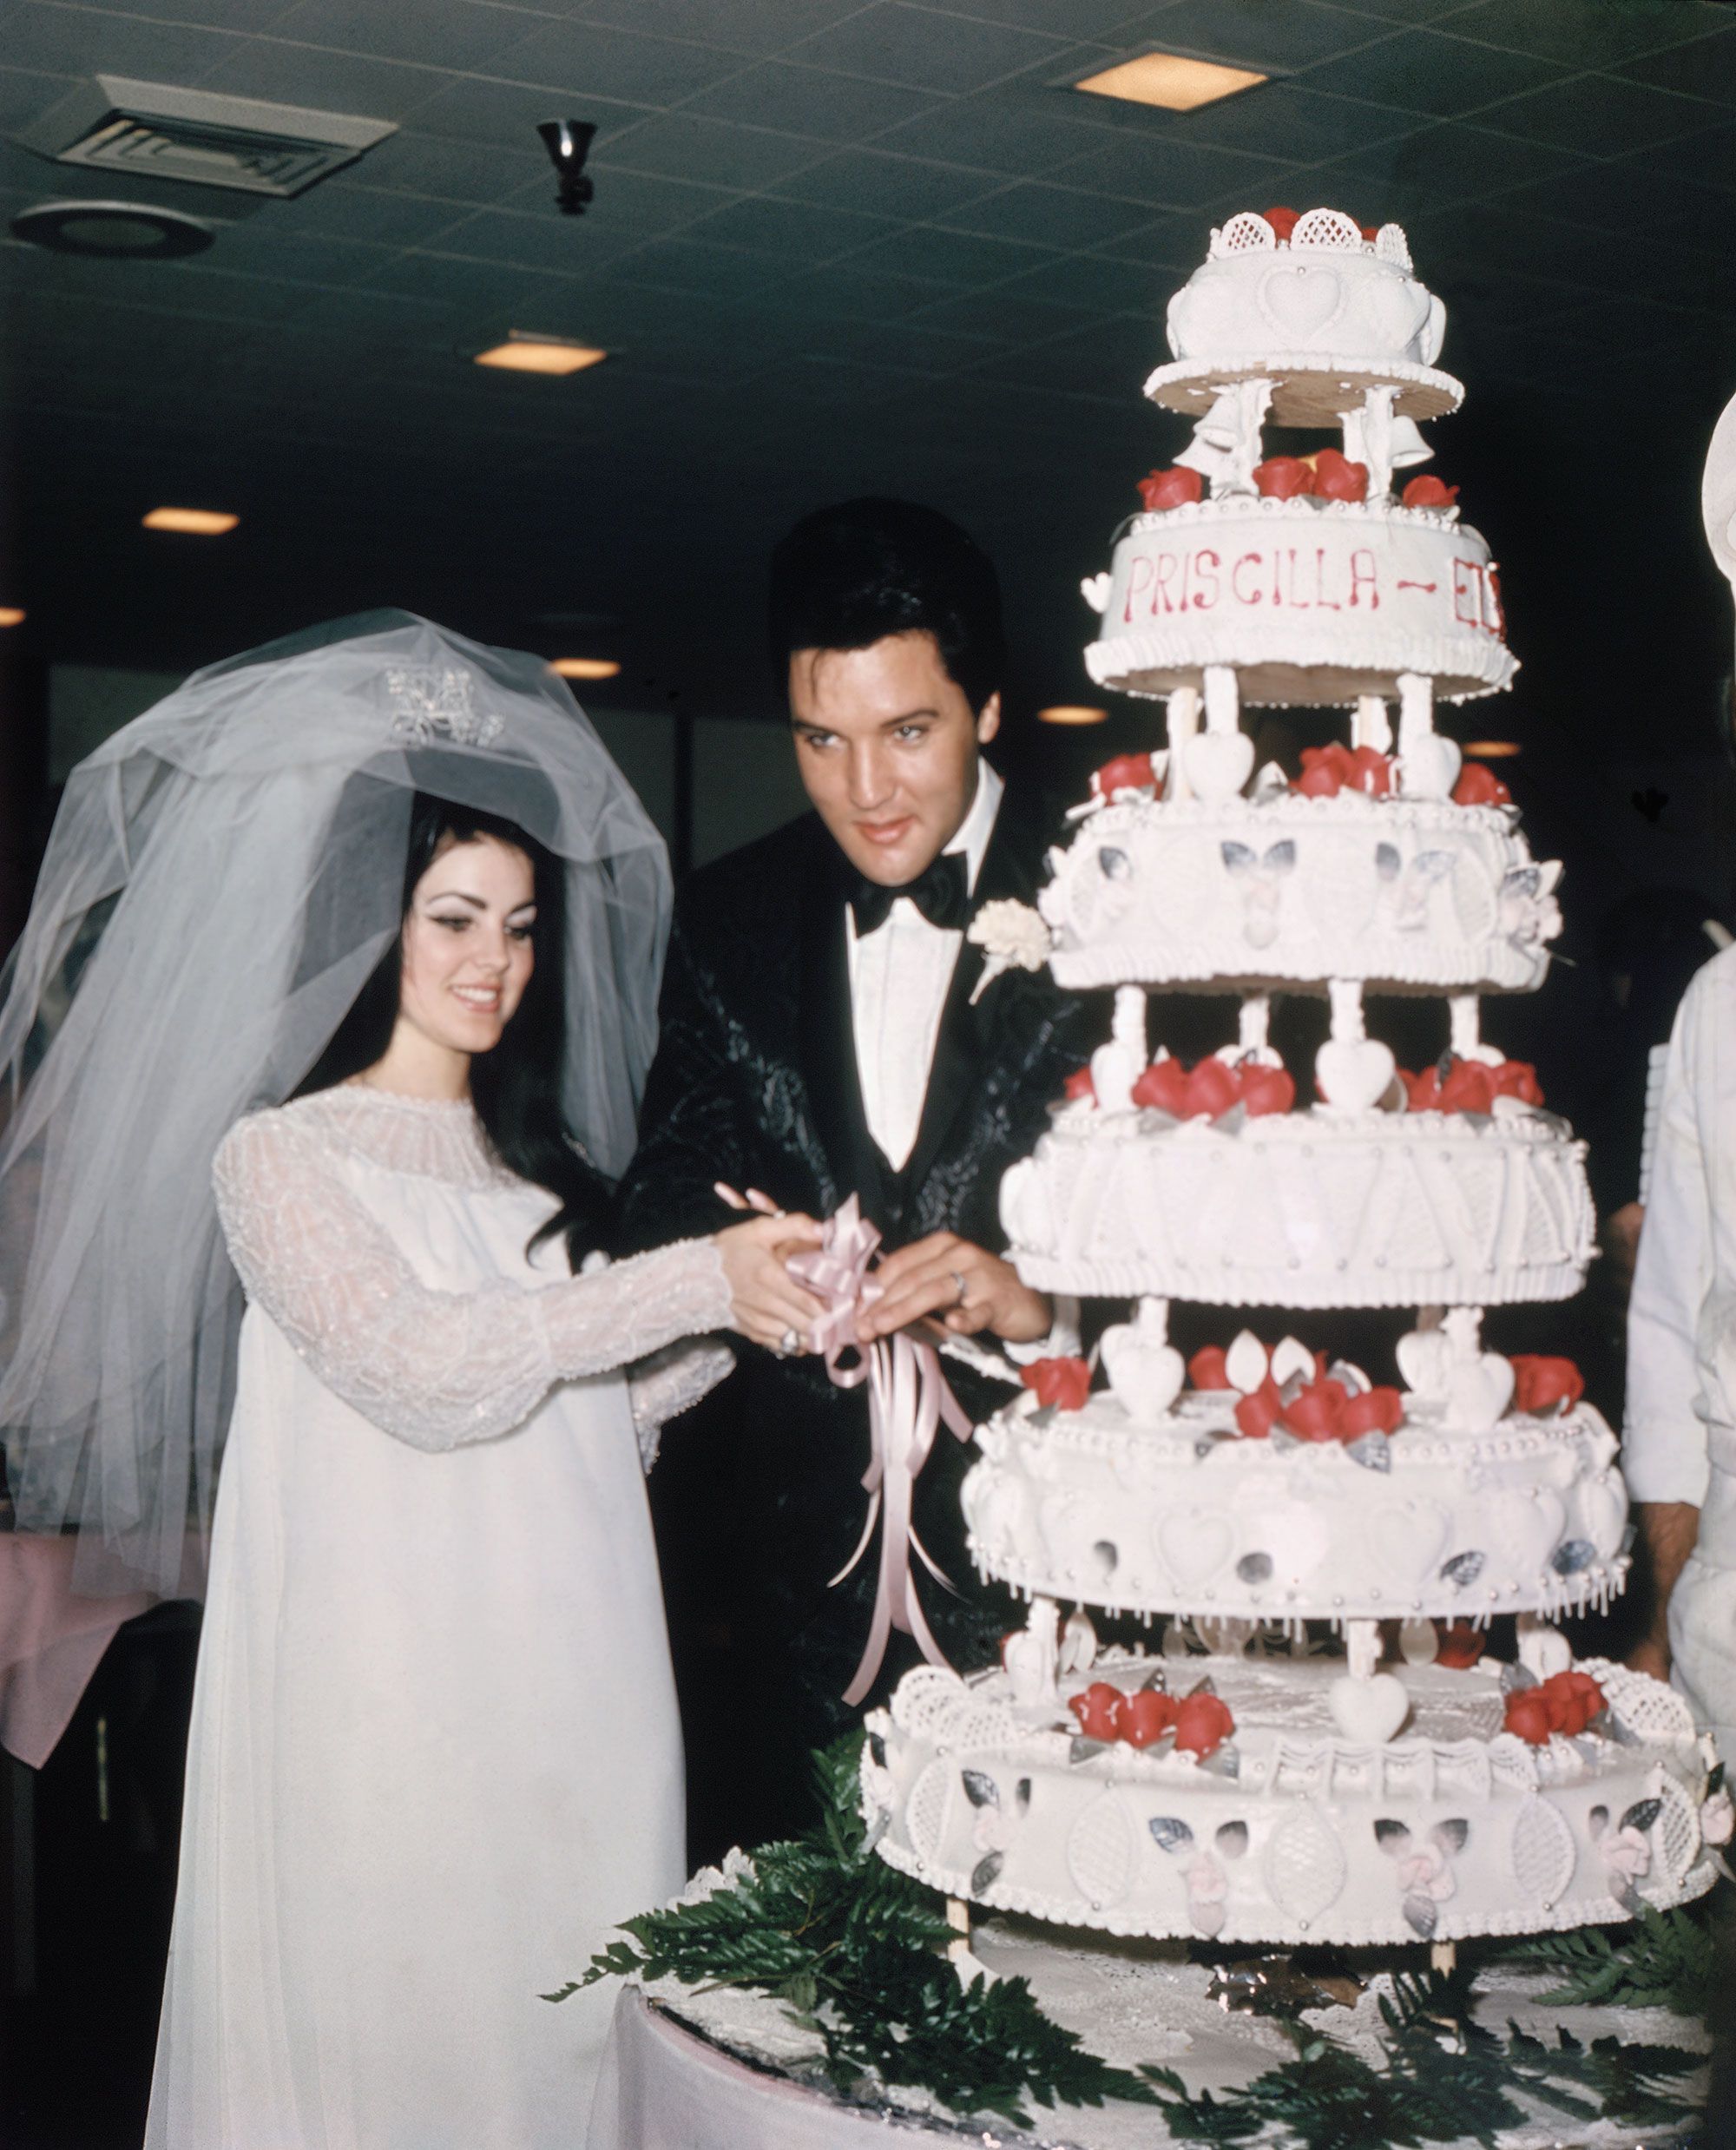 six-tier wedding cake